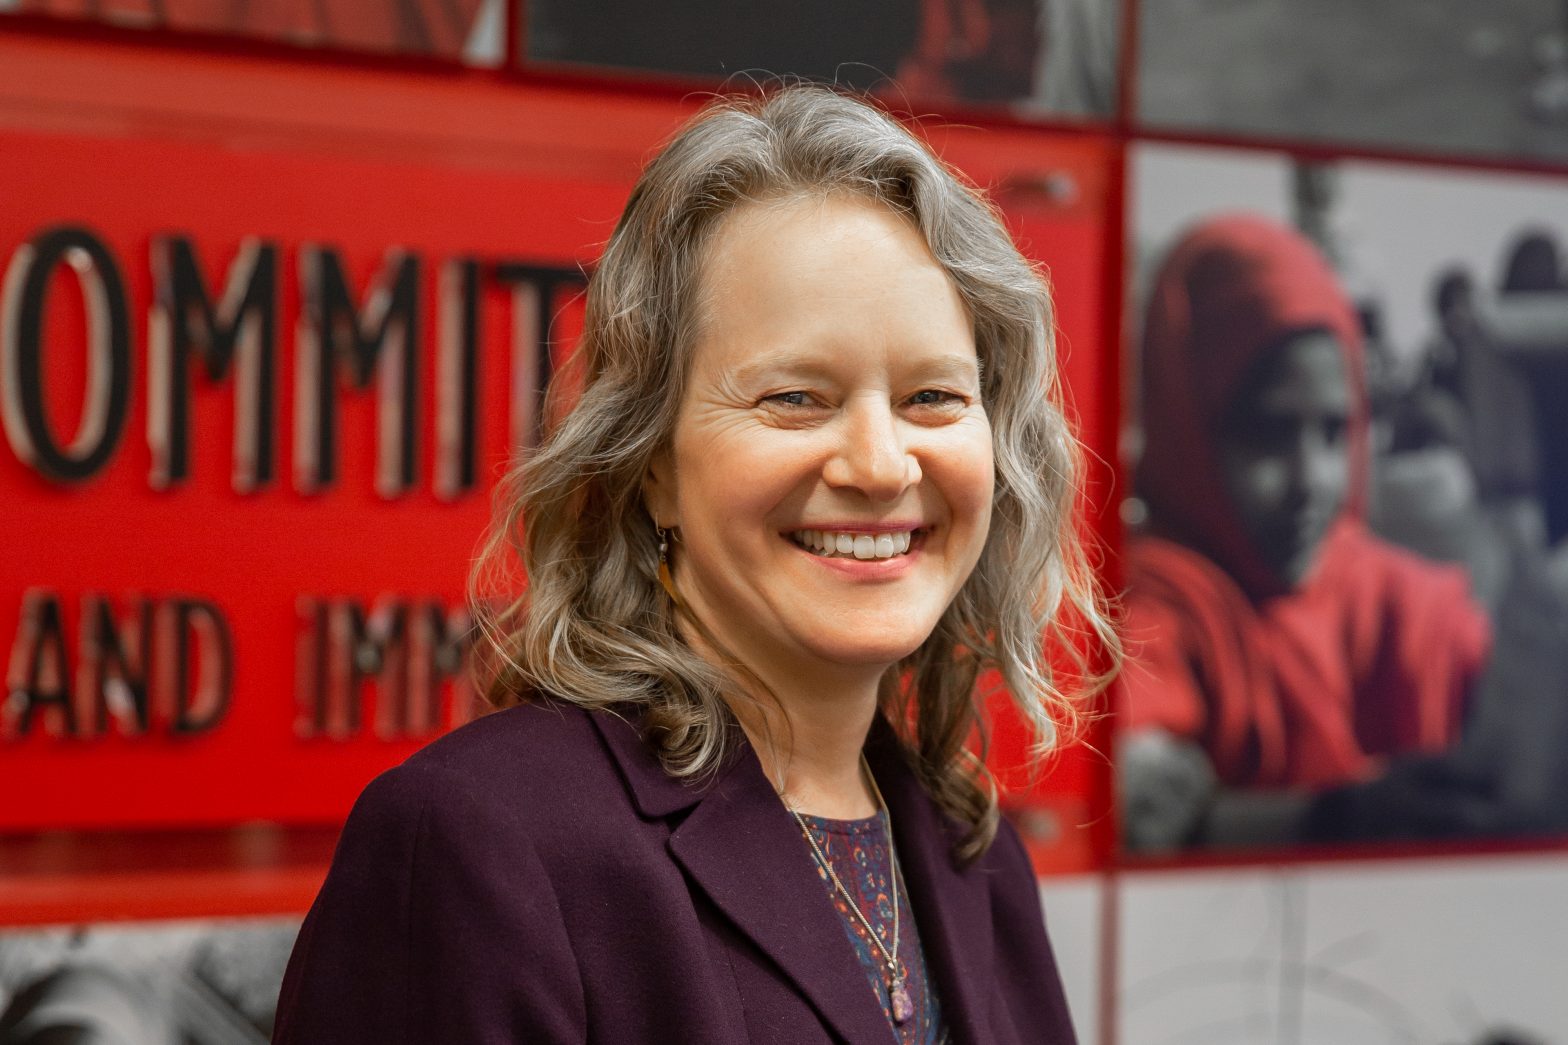 Jill Peckenpaugh, Director of USCRI’s Field Office in Albany